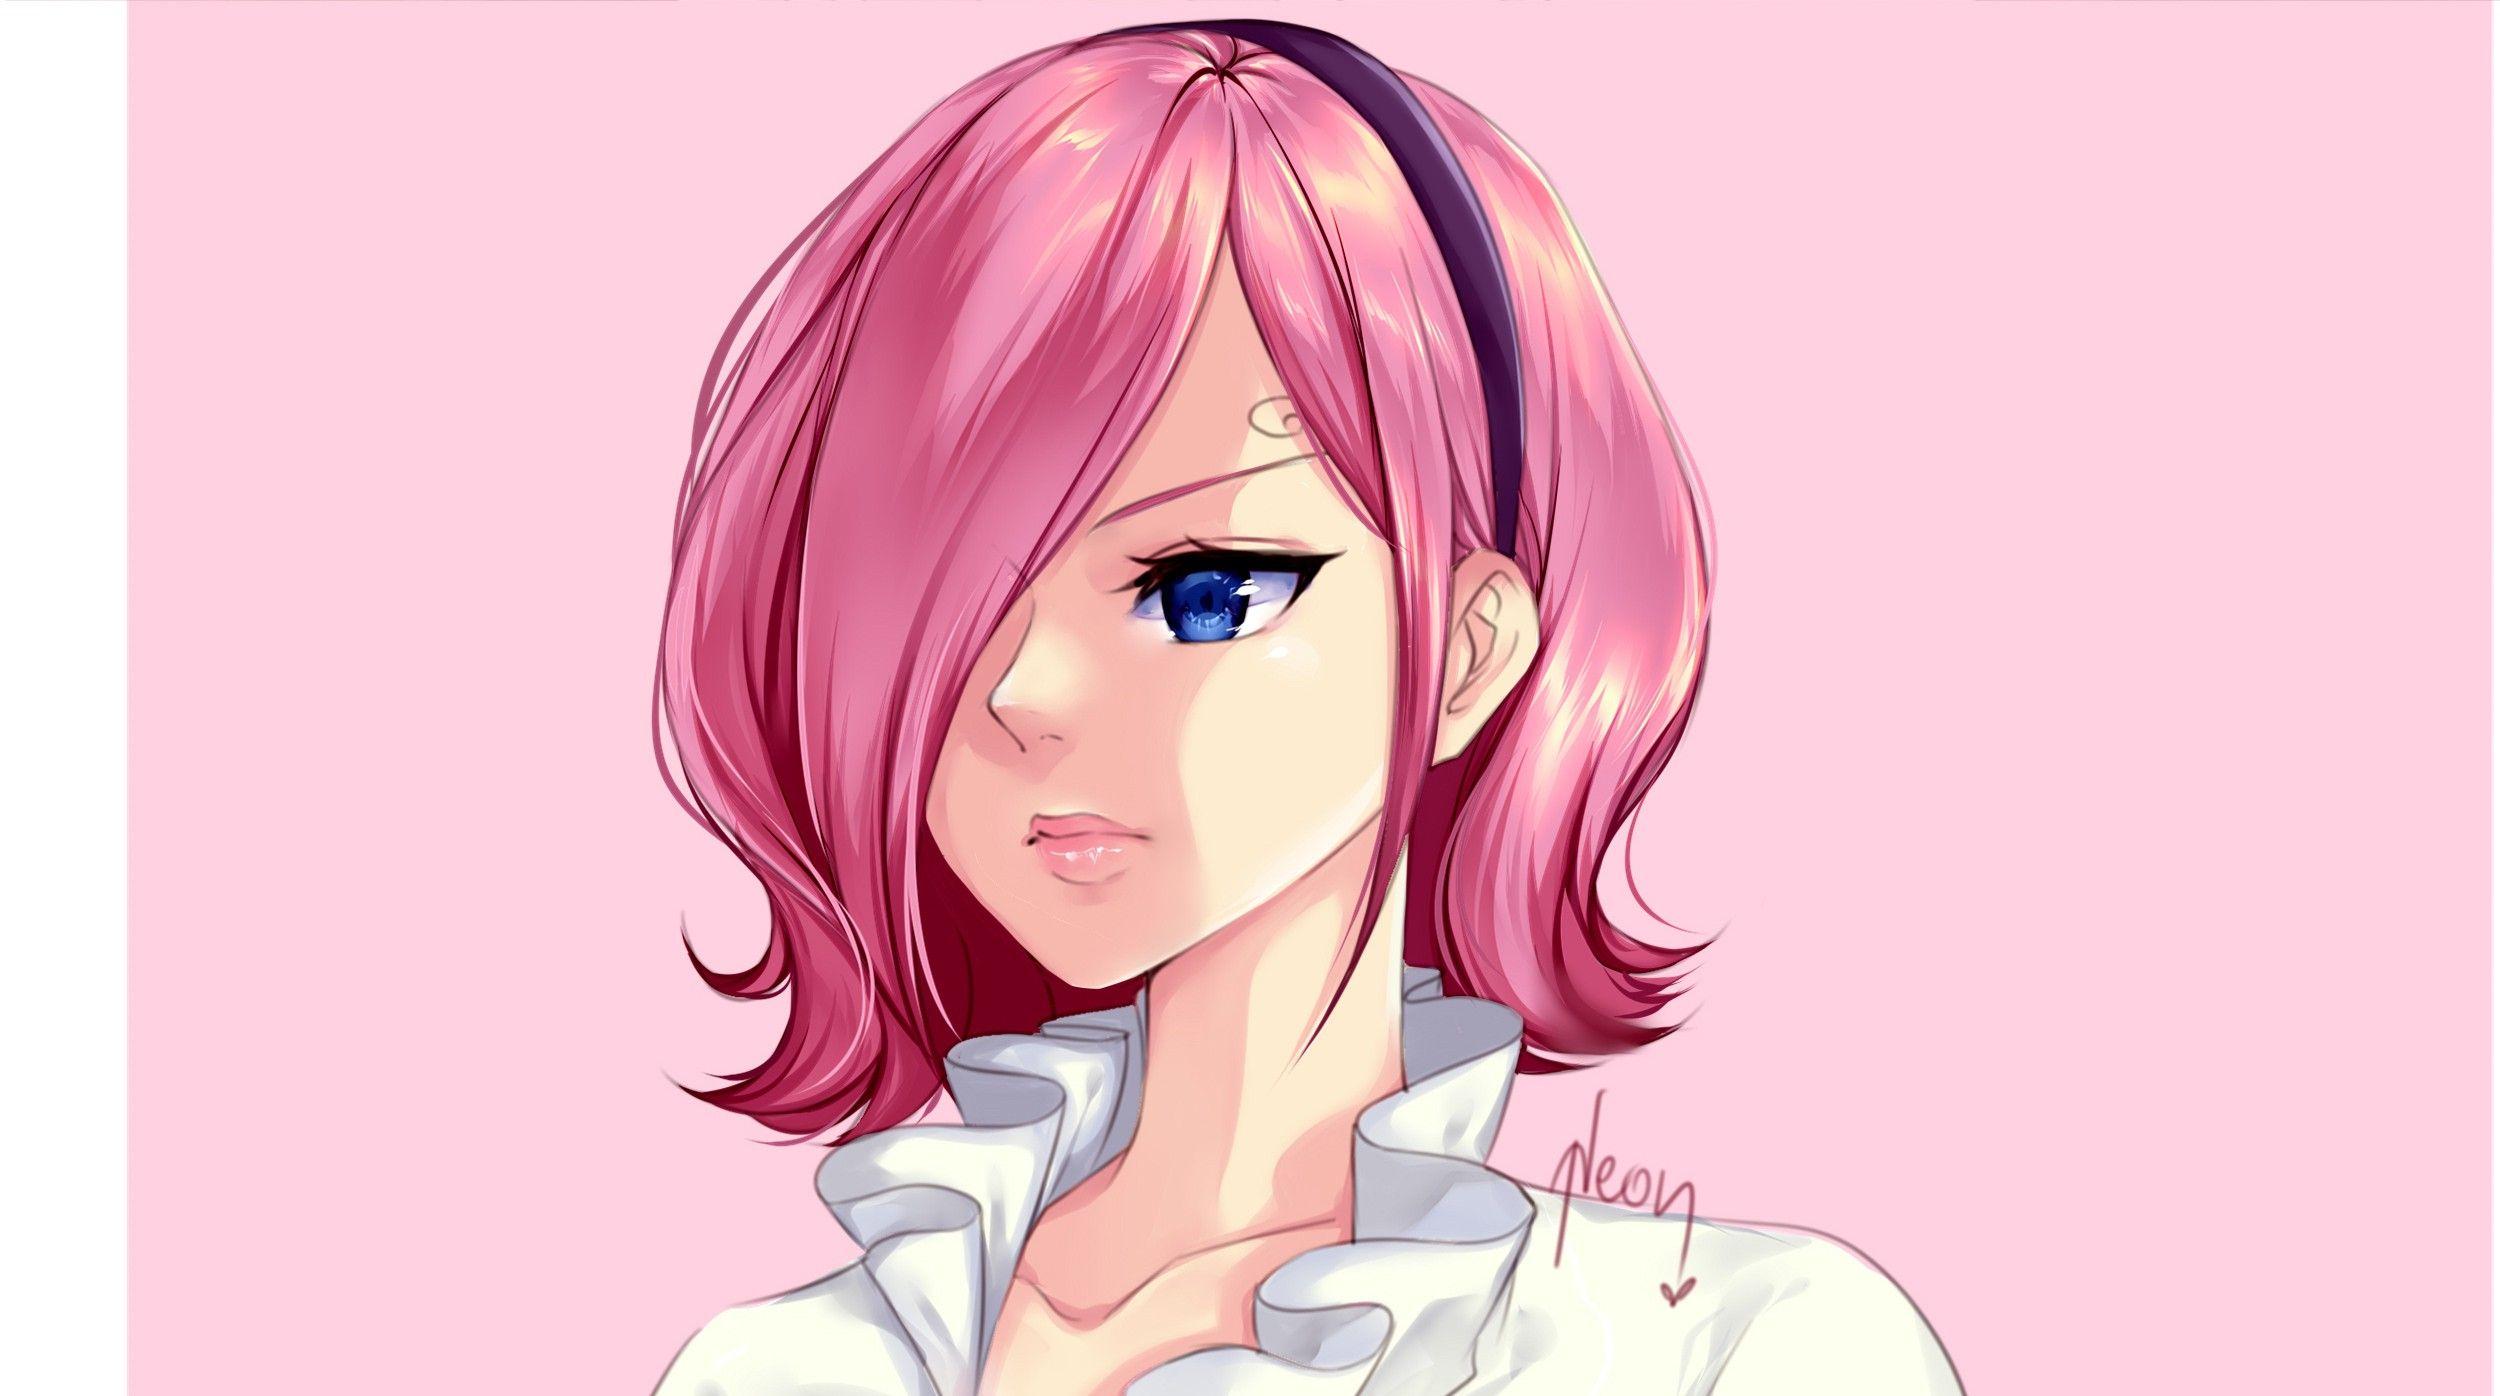 Vinsmoke Reiju. Anime one, One piece world, Girl with pink hair